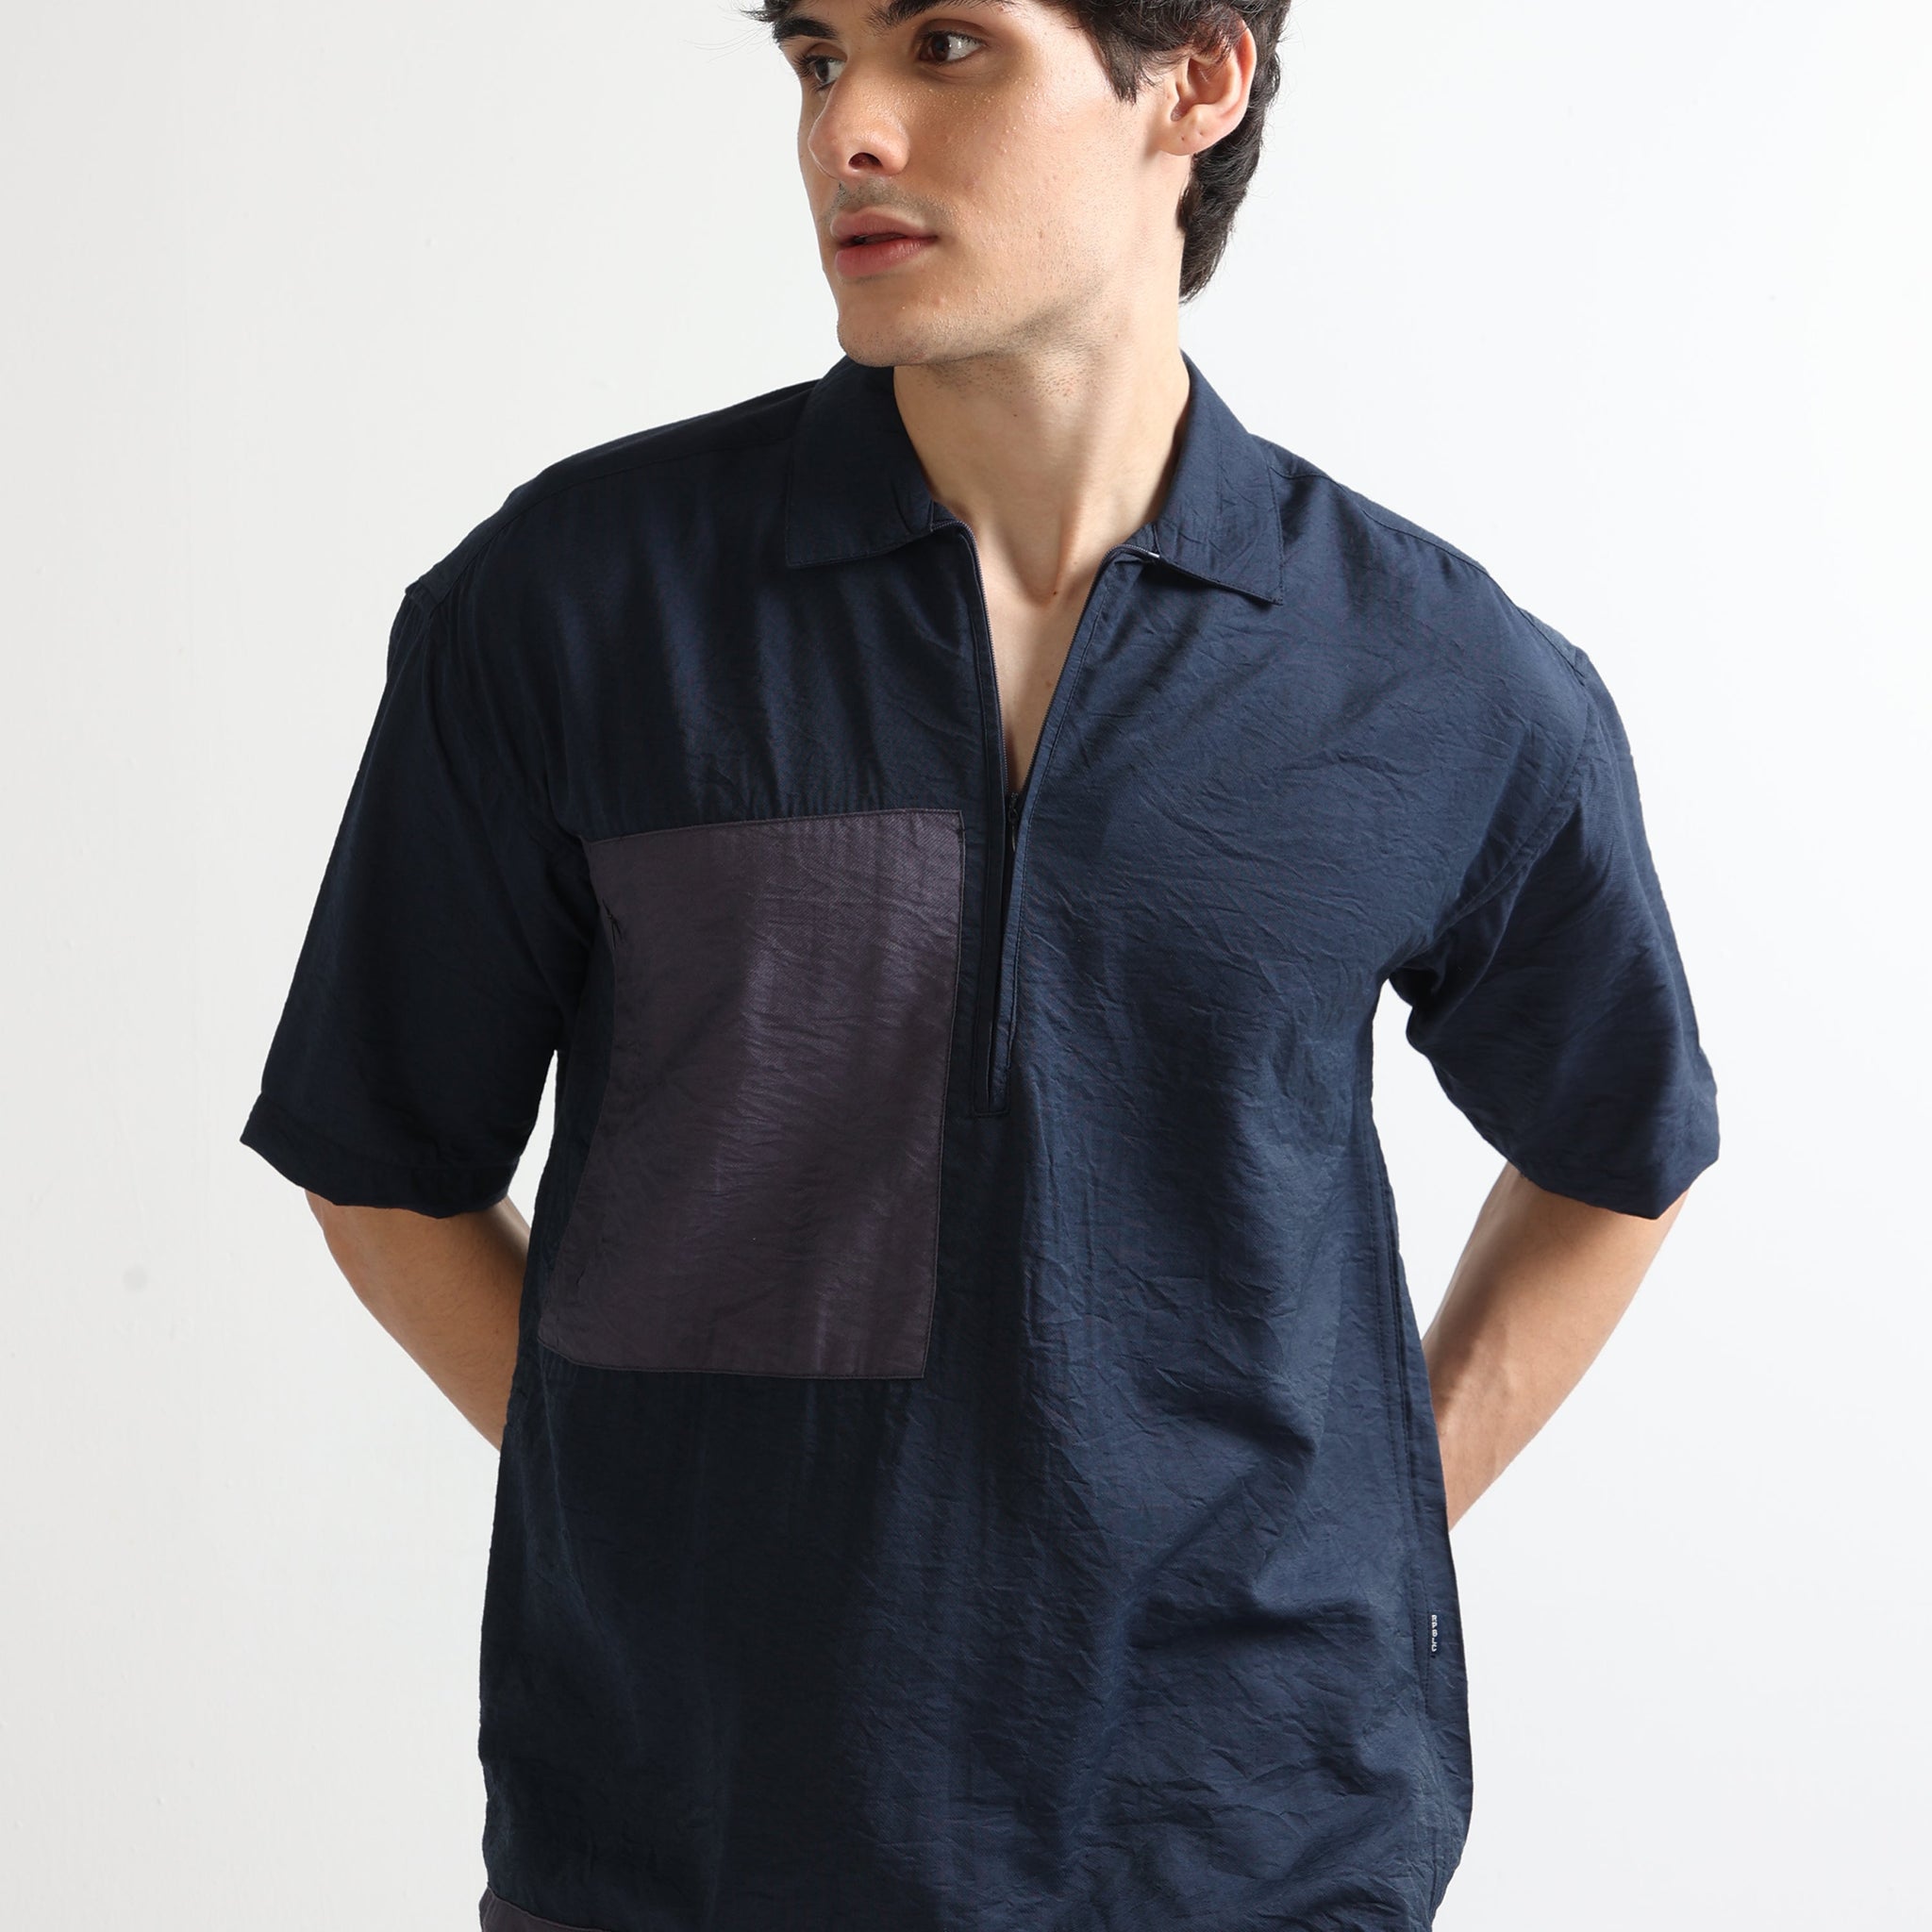 Buy Imported Fabric Stylish Drawcod Shirt Online